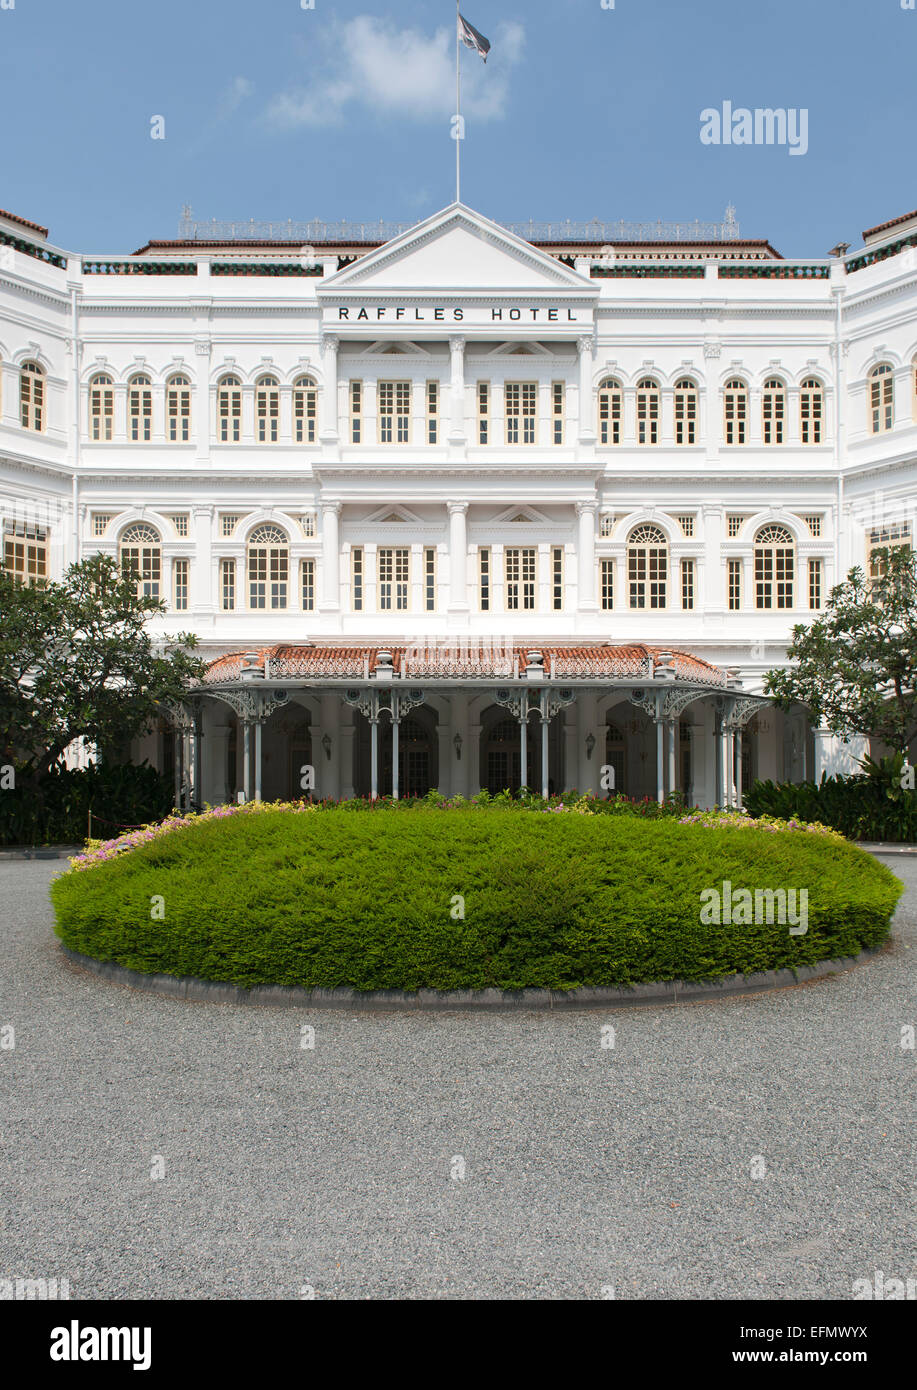 El Raffles Hotel en Singapur. Foto de stock